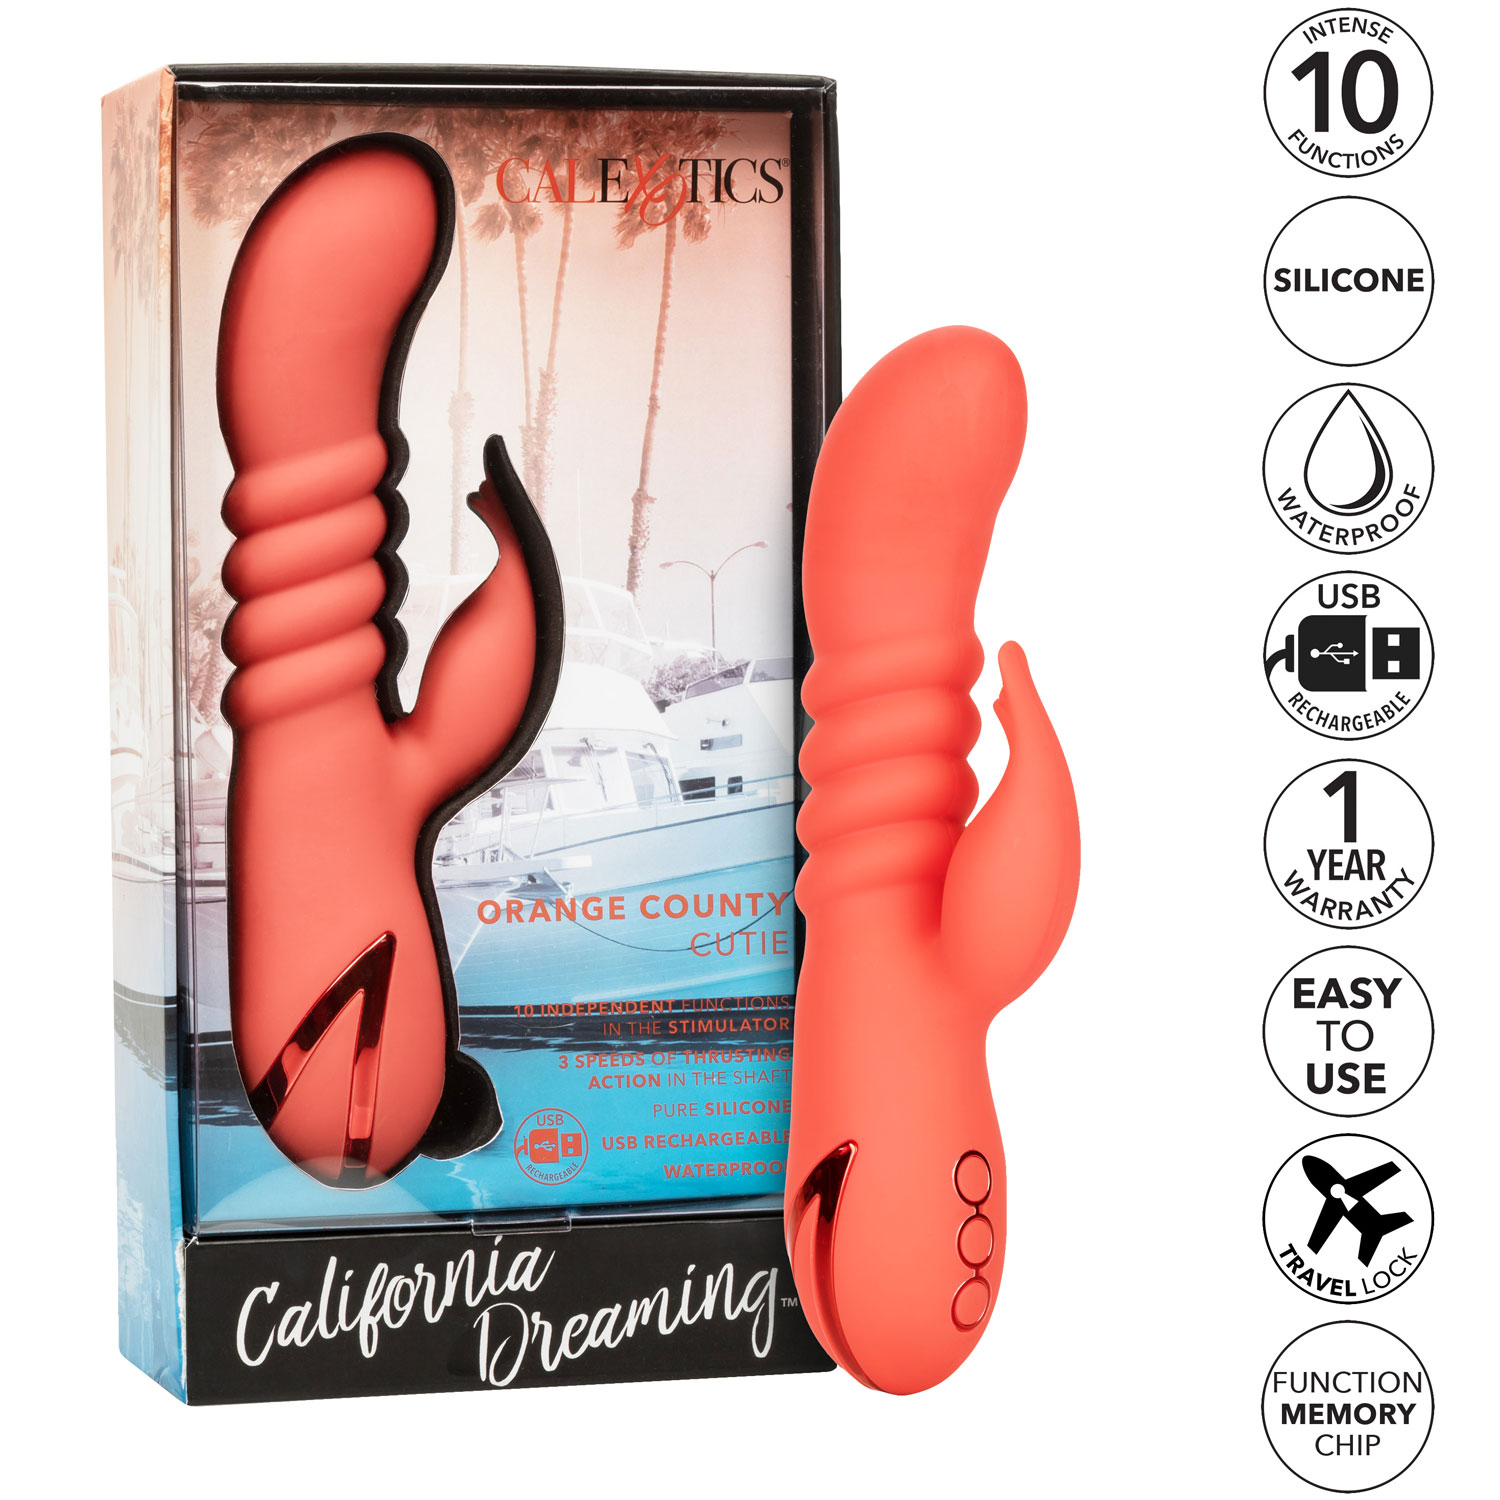 California Dreaming Orange County Cutie Rabbit Style Silicone Vibrator - Features